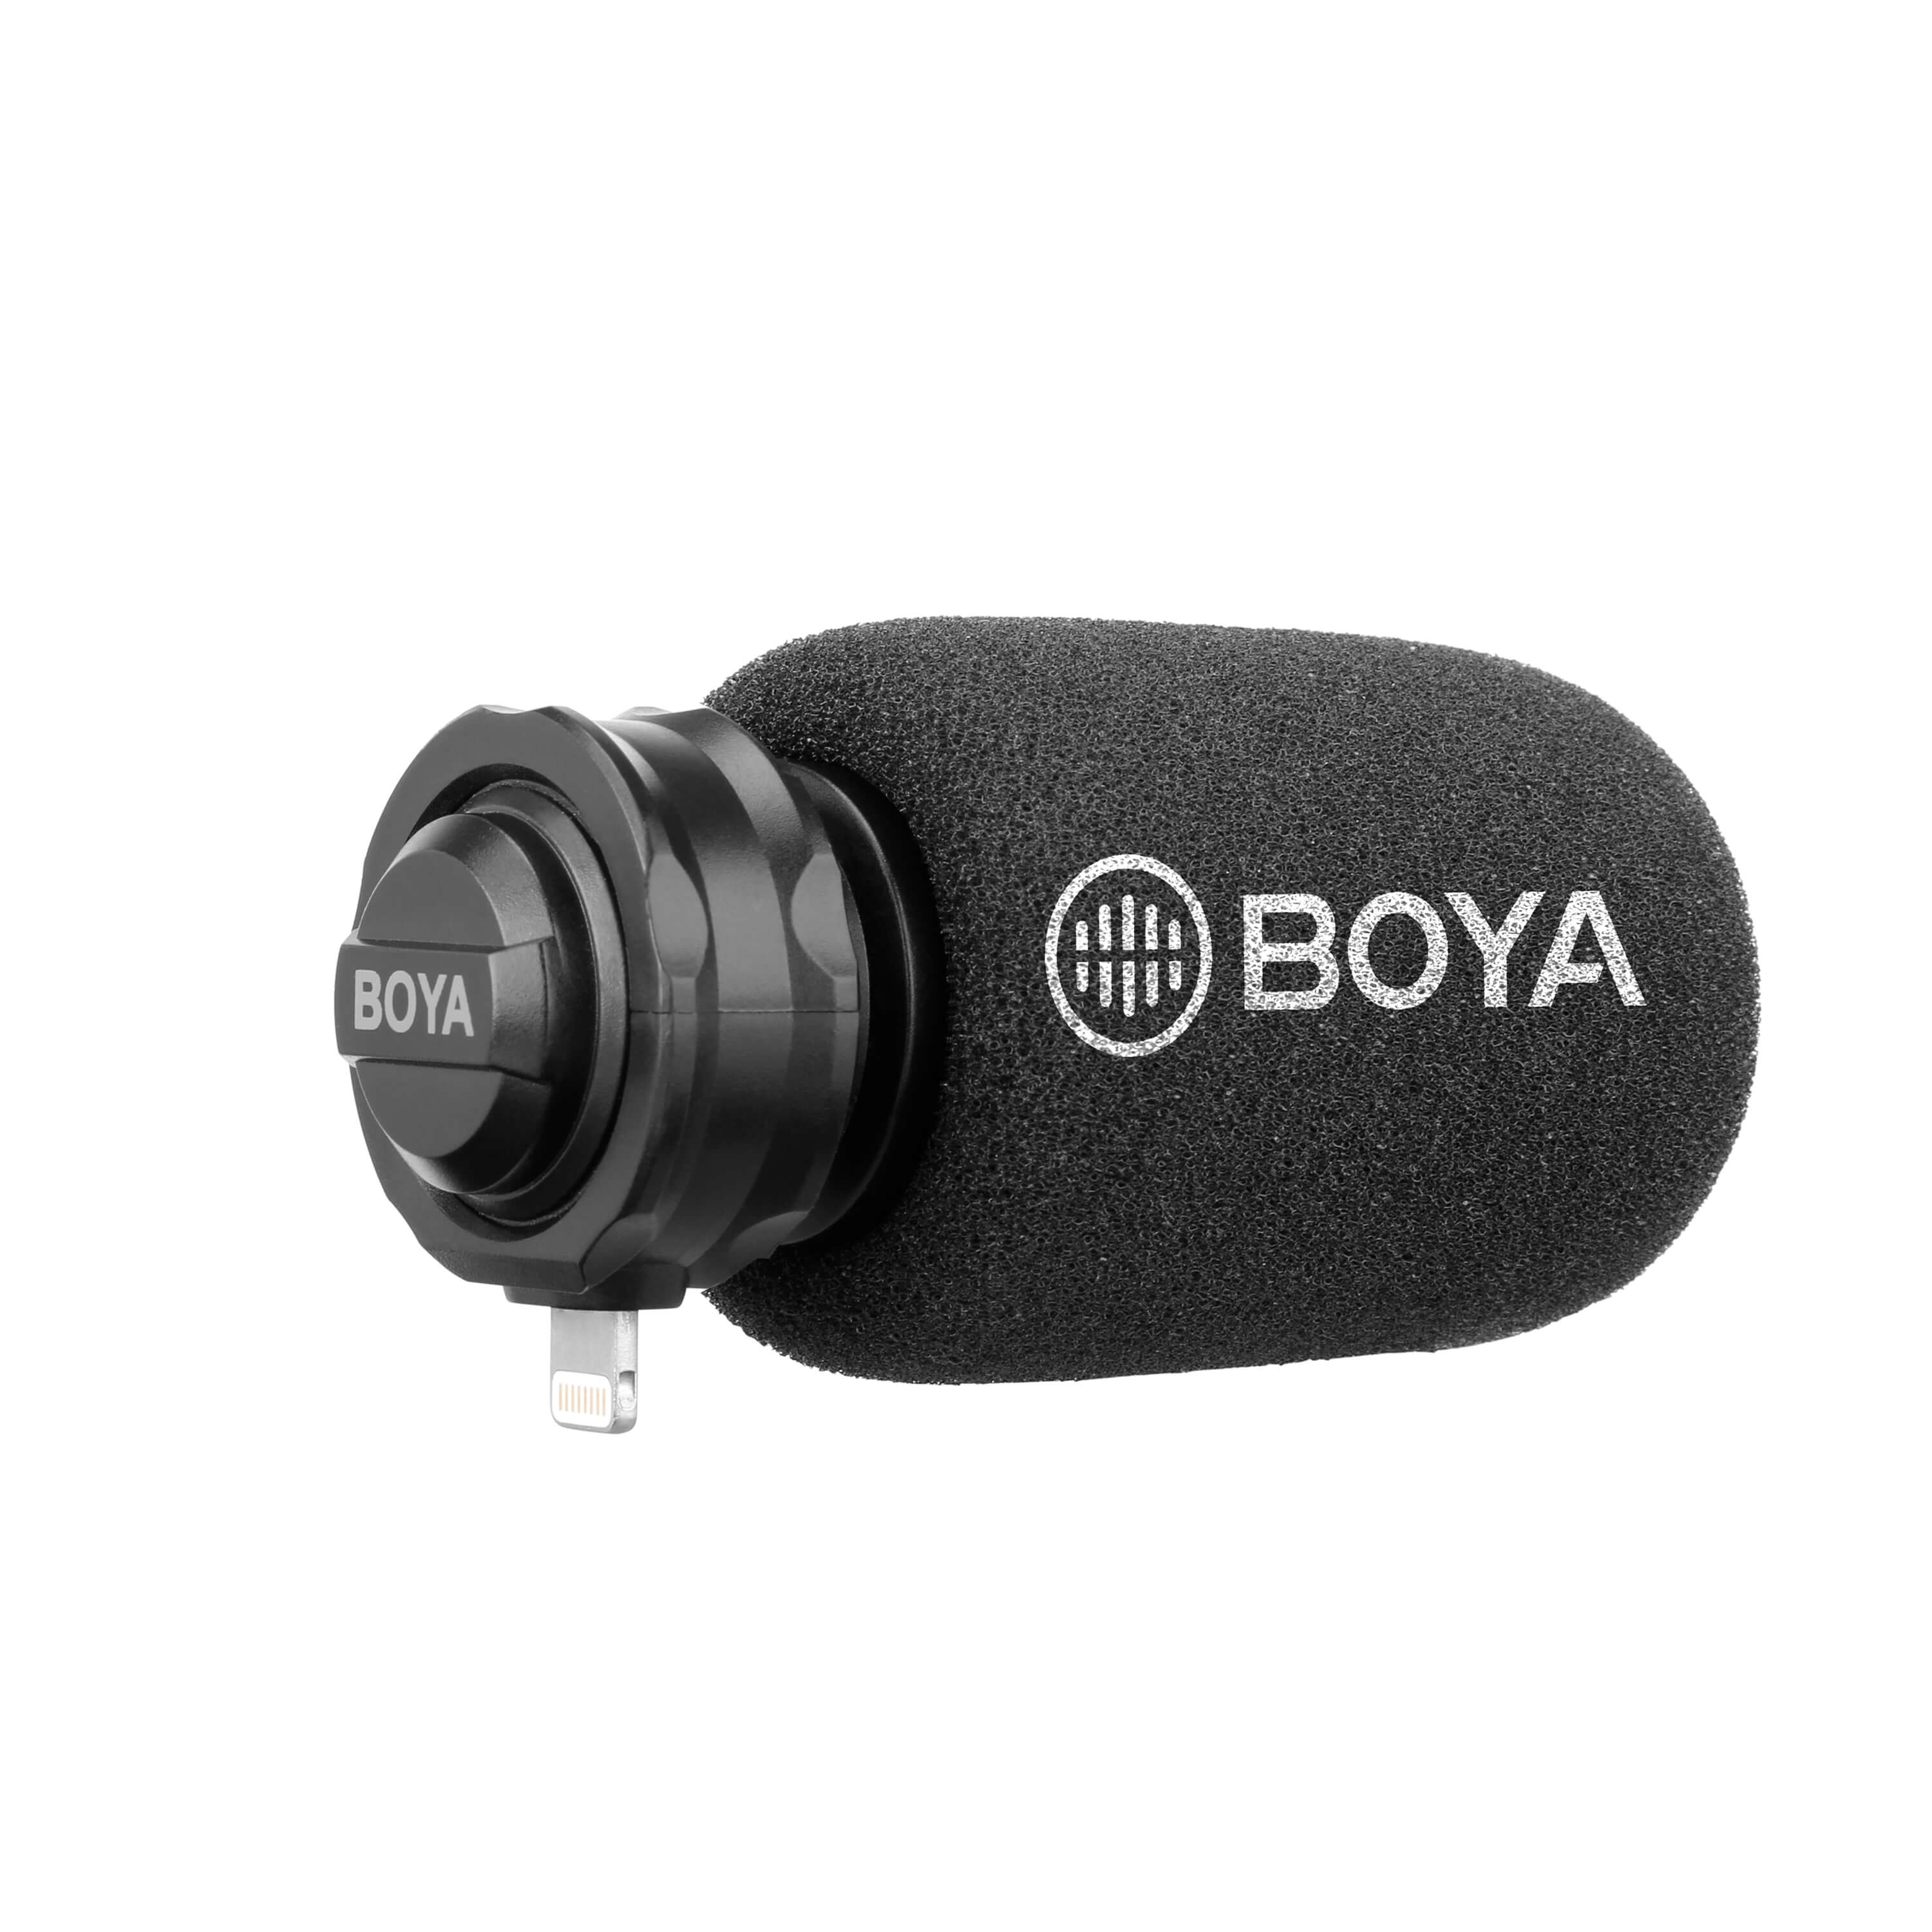 BOYA Microphone BY-DM200 Condensator  Digital Lightning